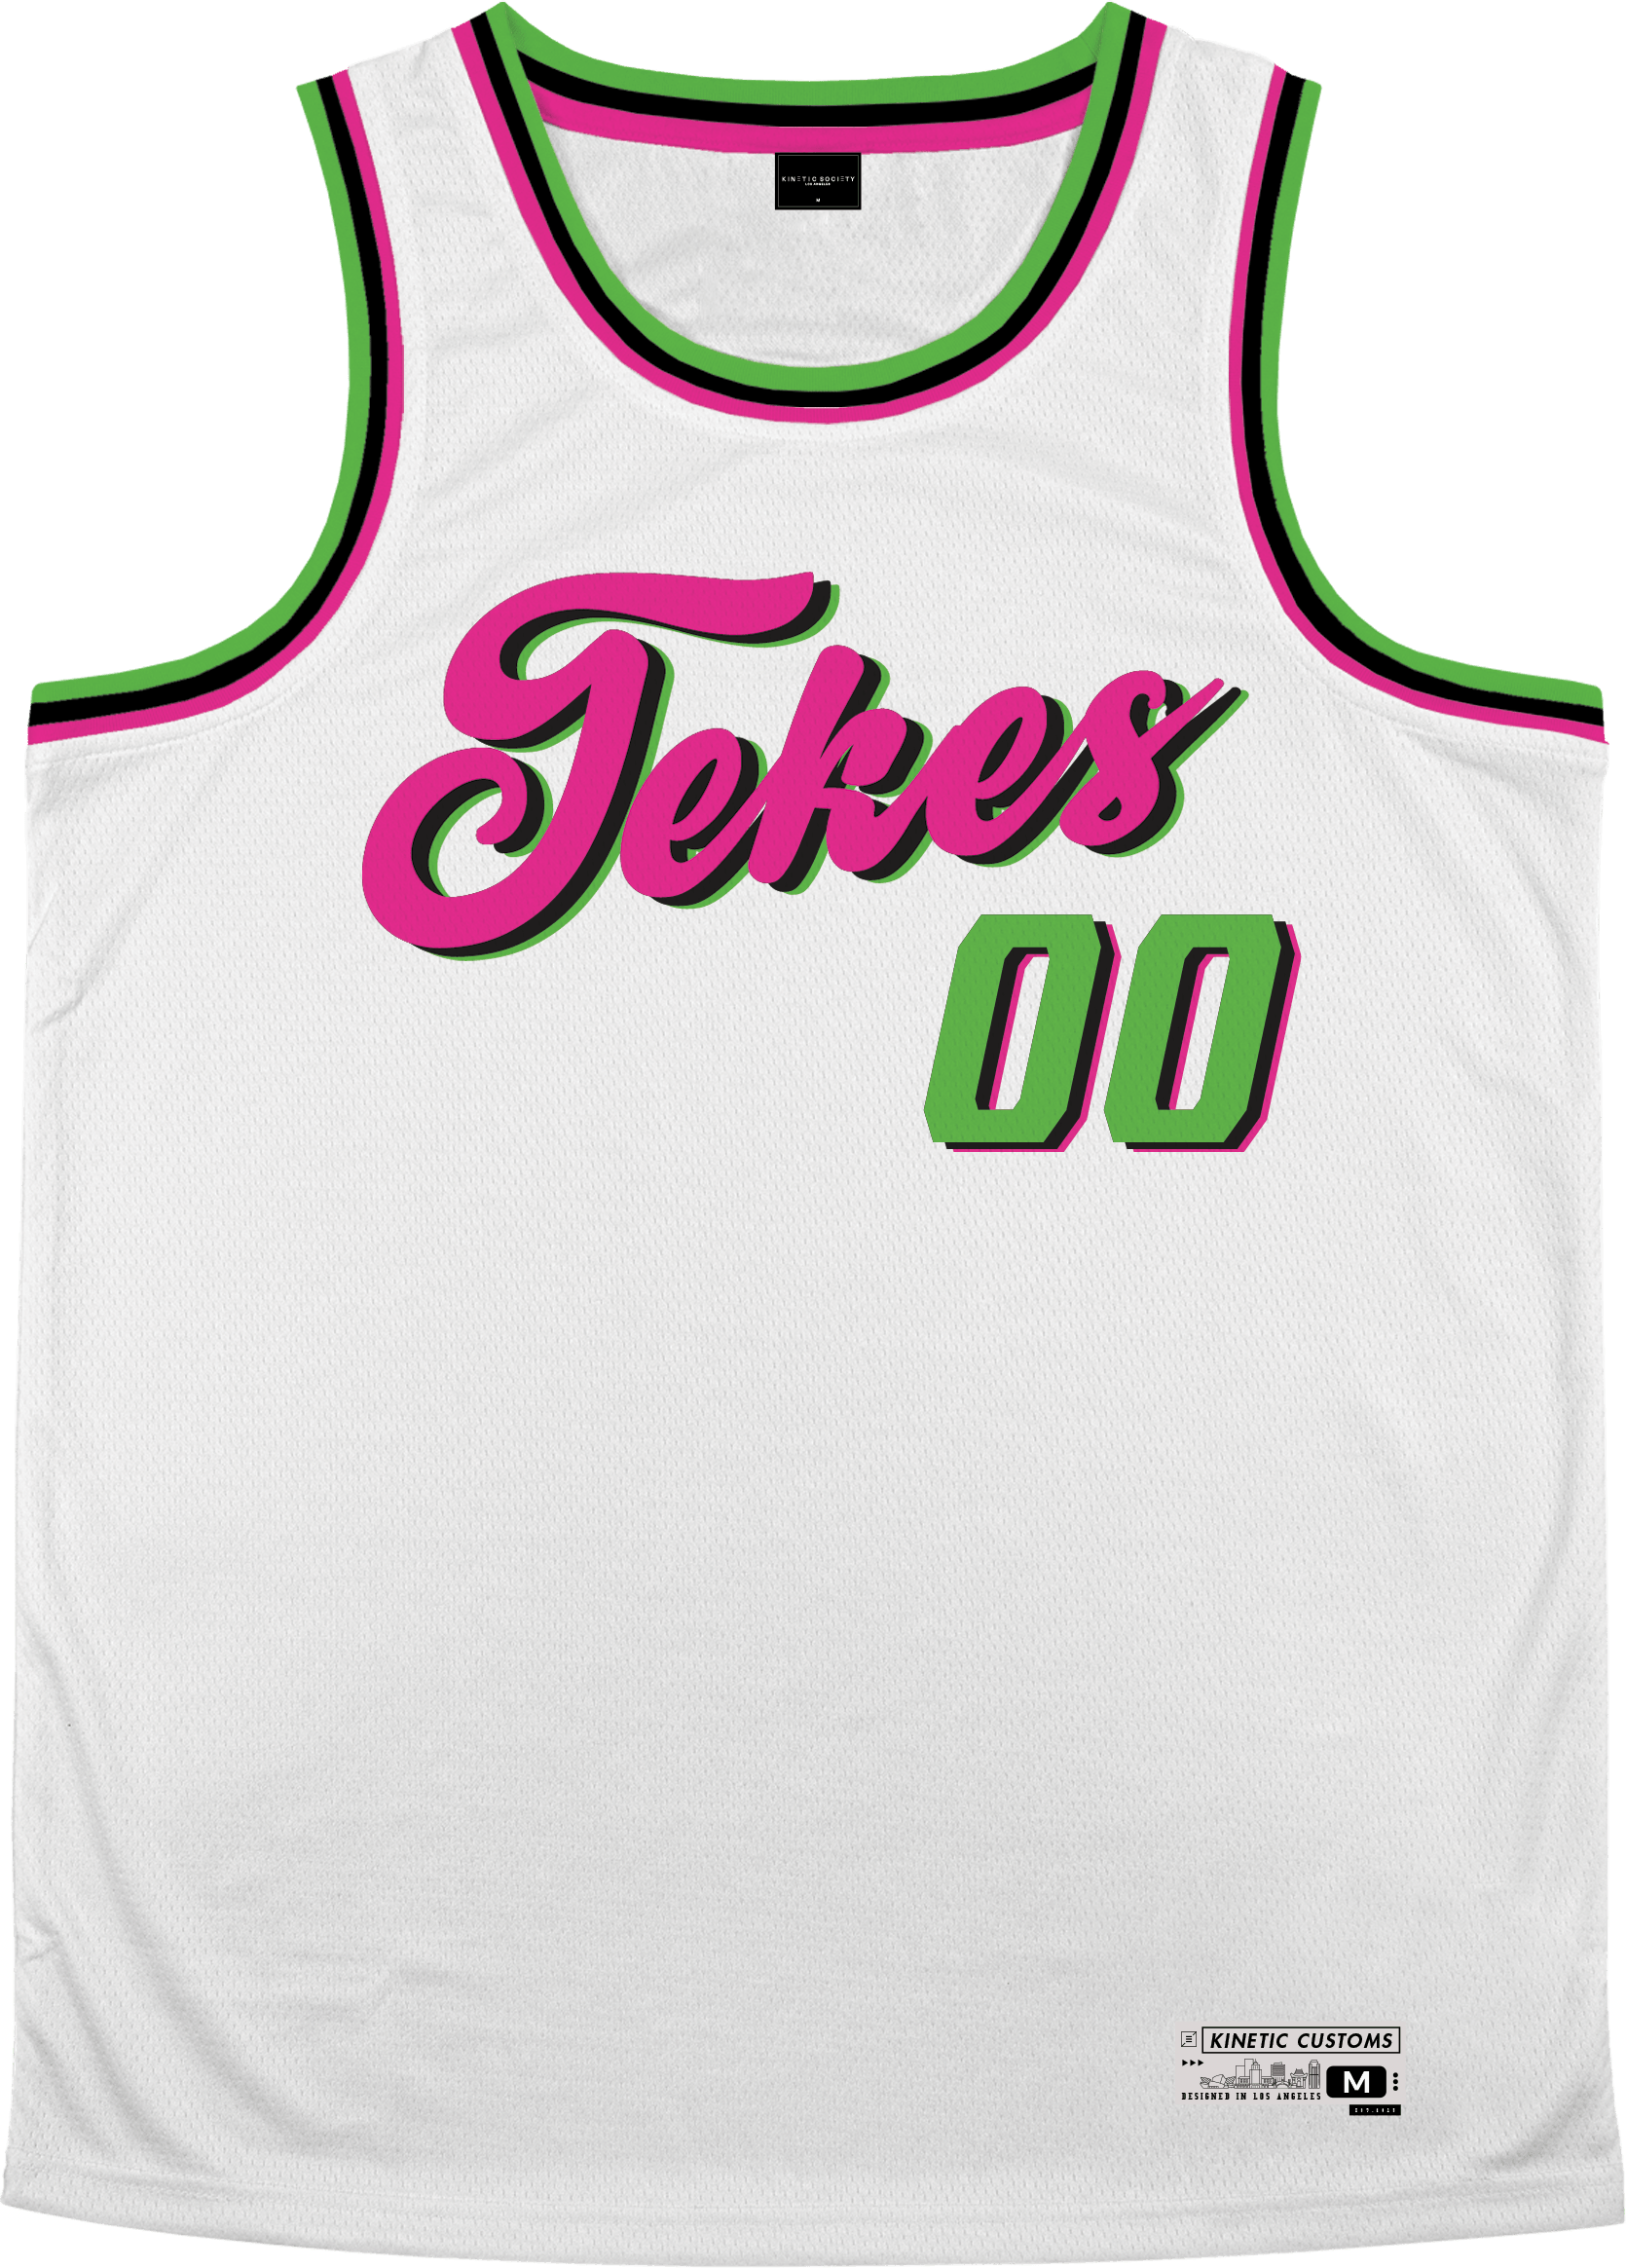 Tau Kappa Epsilon - Bubble Gum Basketball Jersey - Kinetic Society